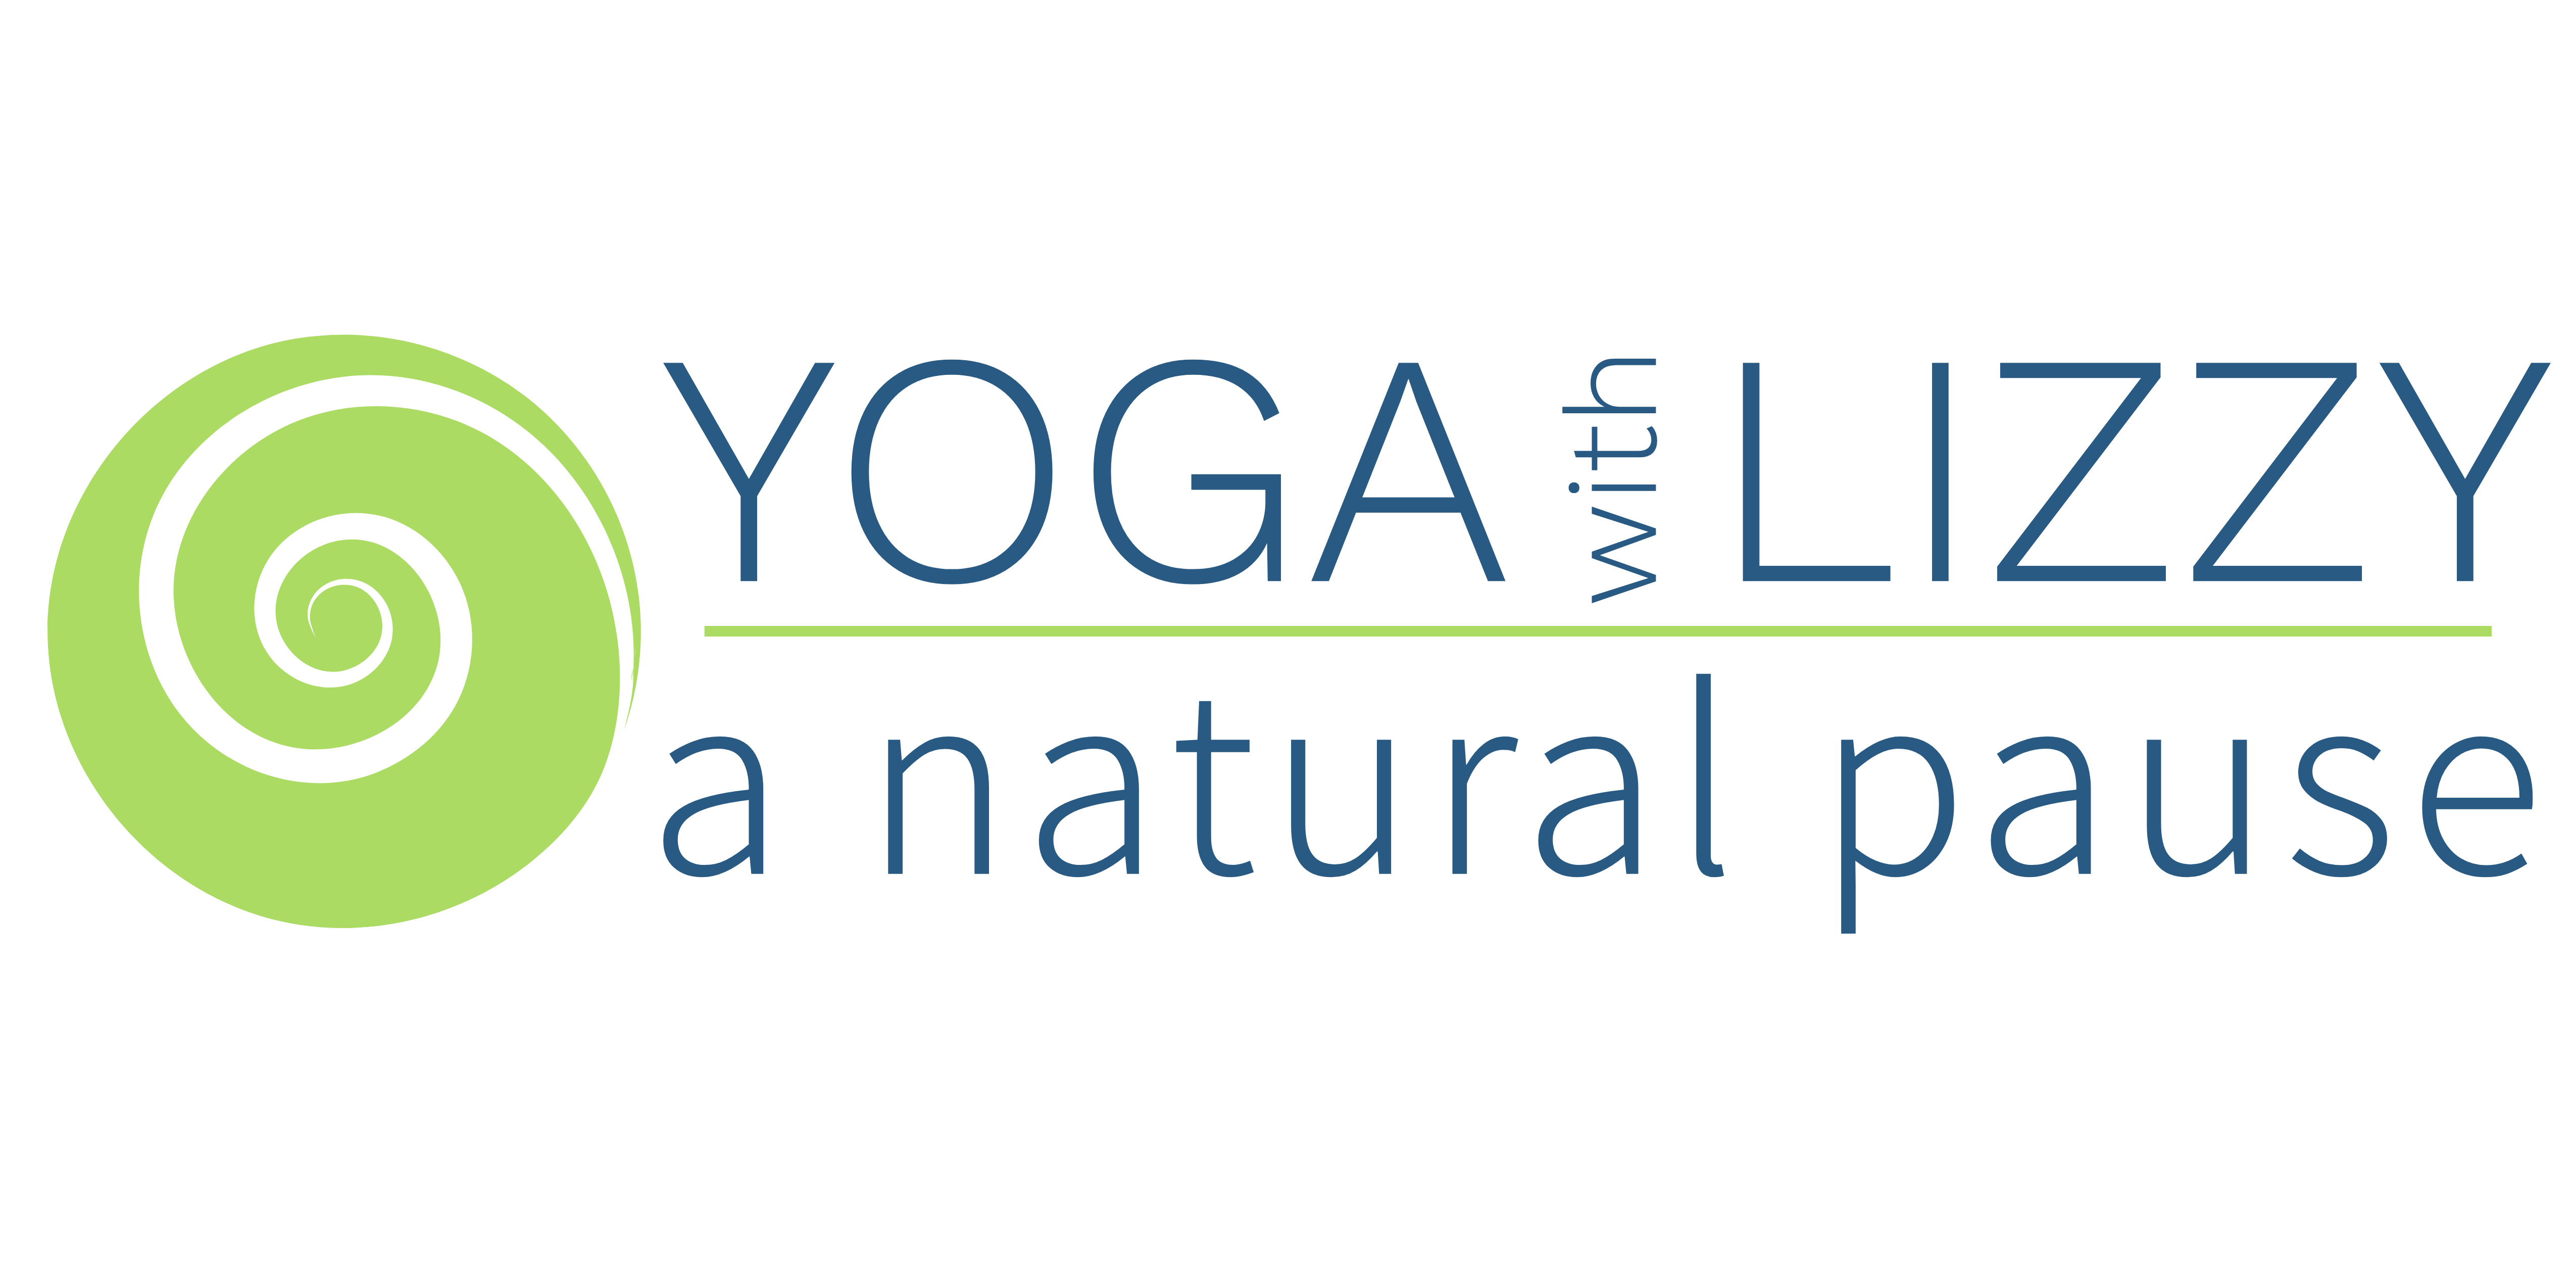 Yoga With Lizzy's logo